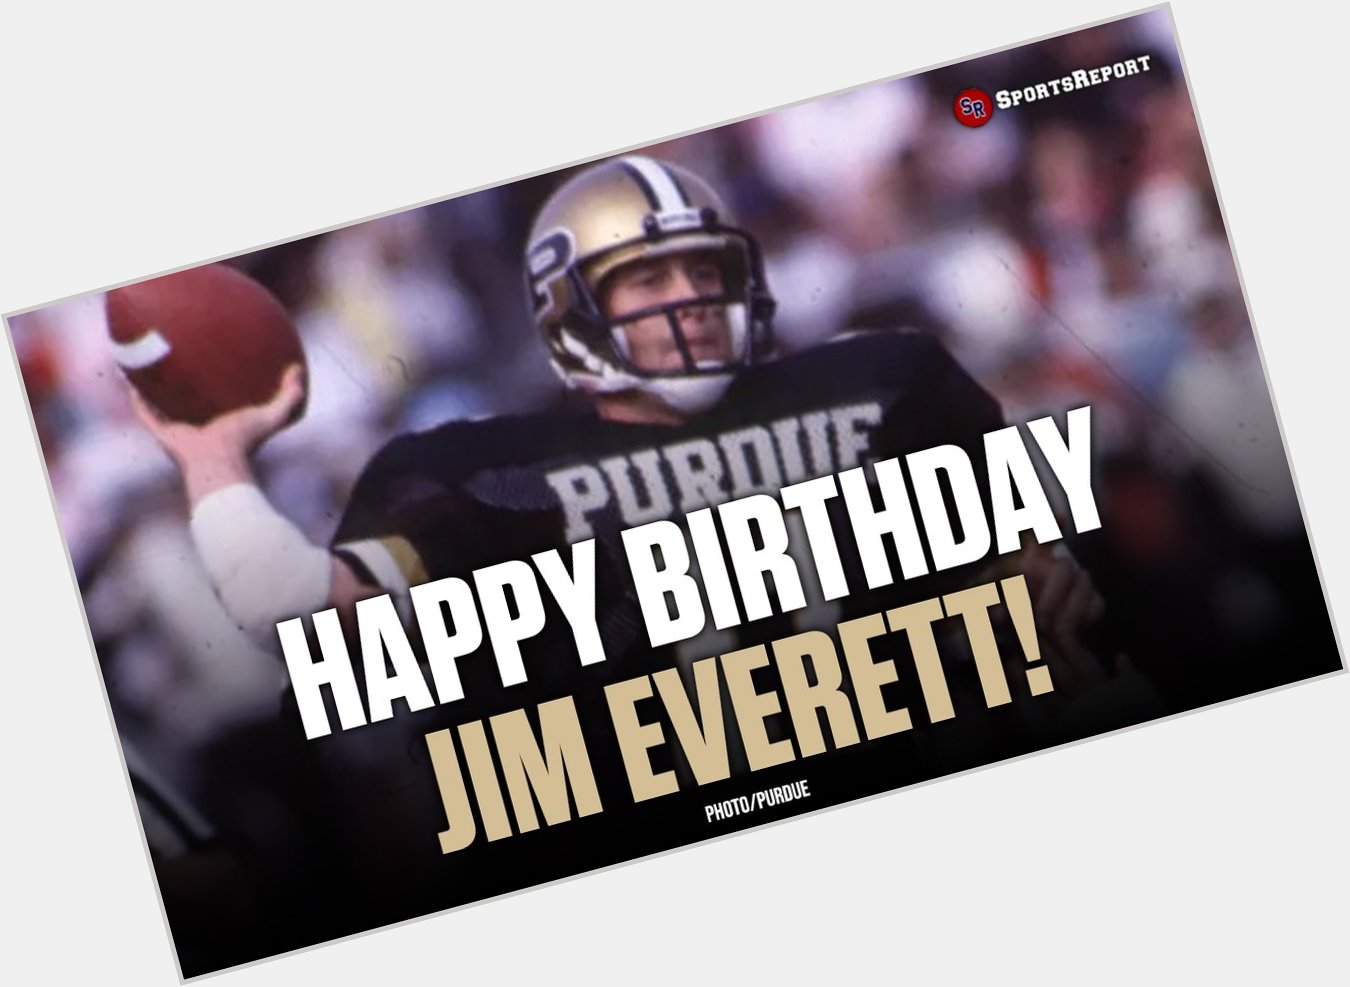  Fans, let\s wish Legend Jim Everett a Happy Birthday! 